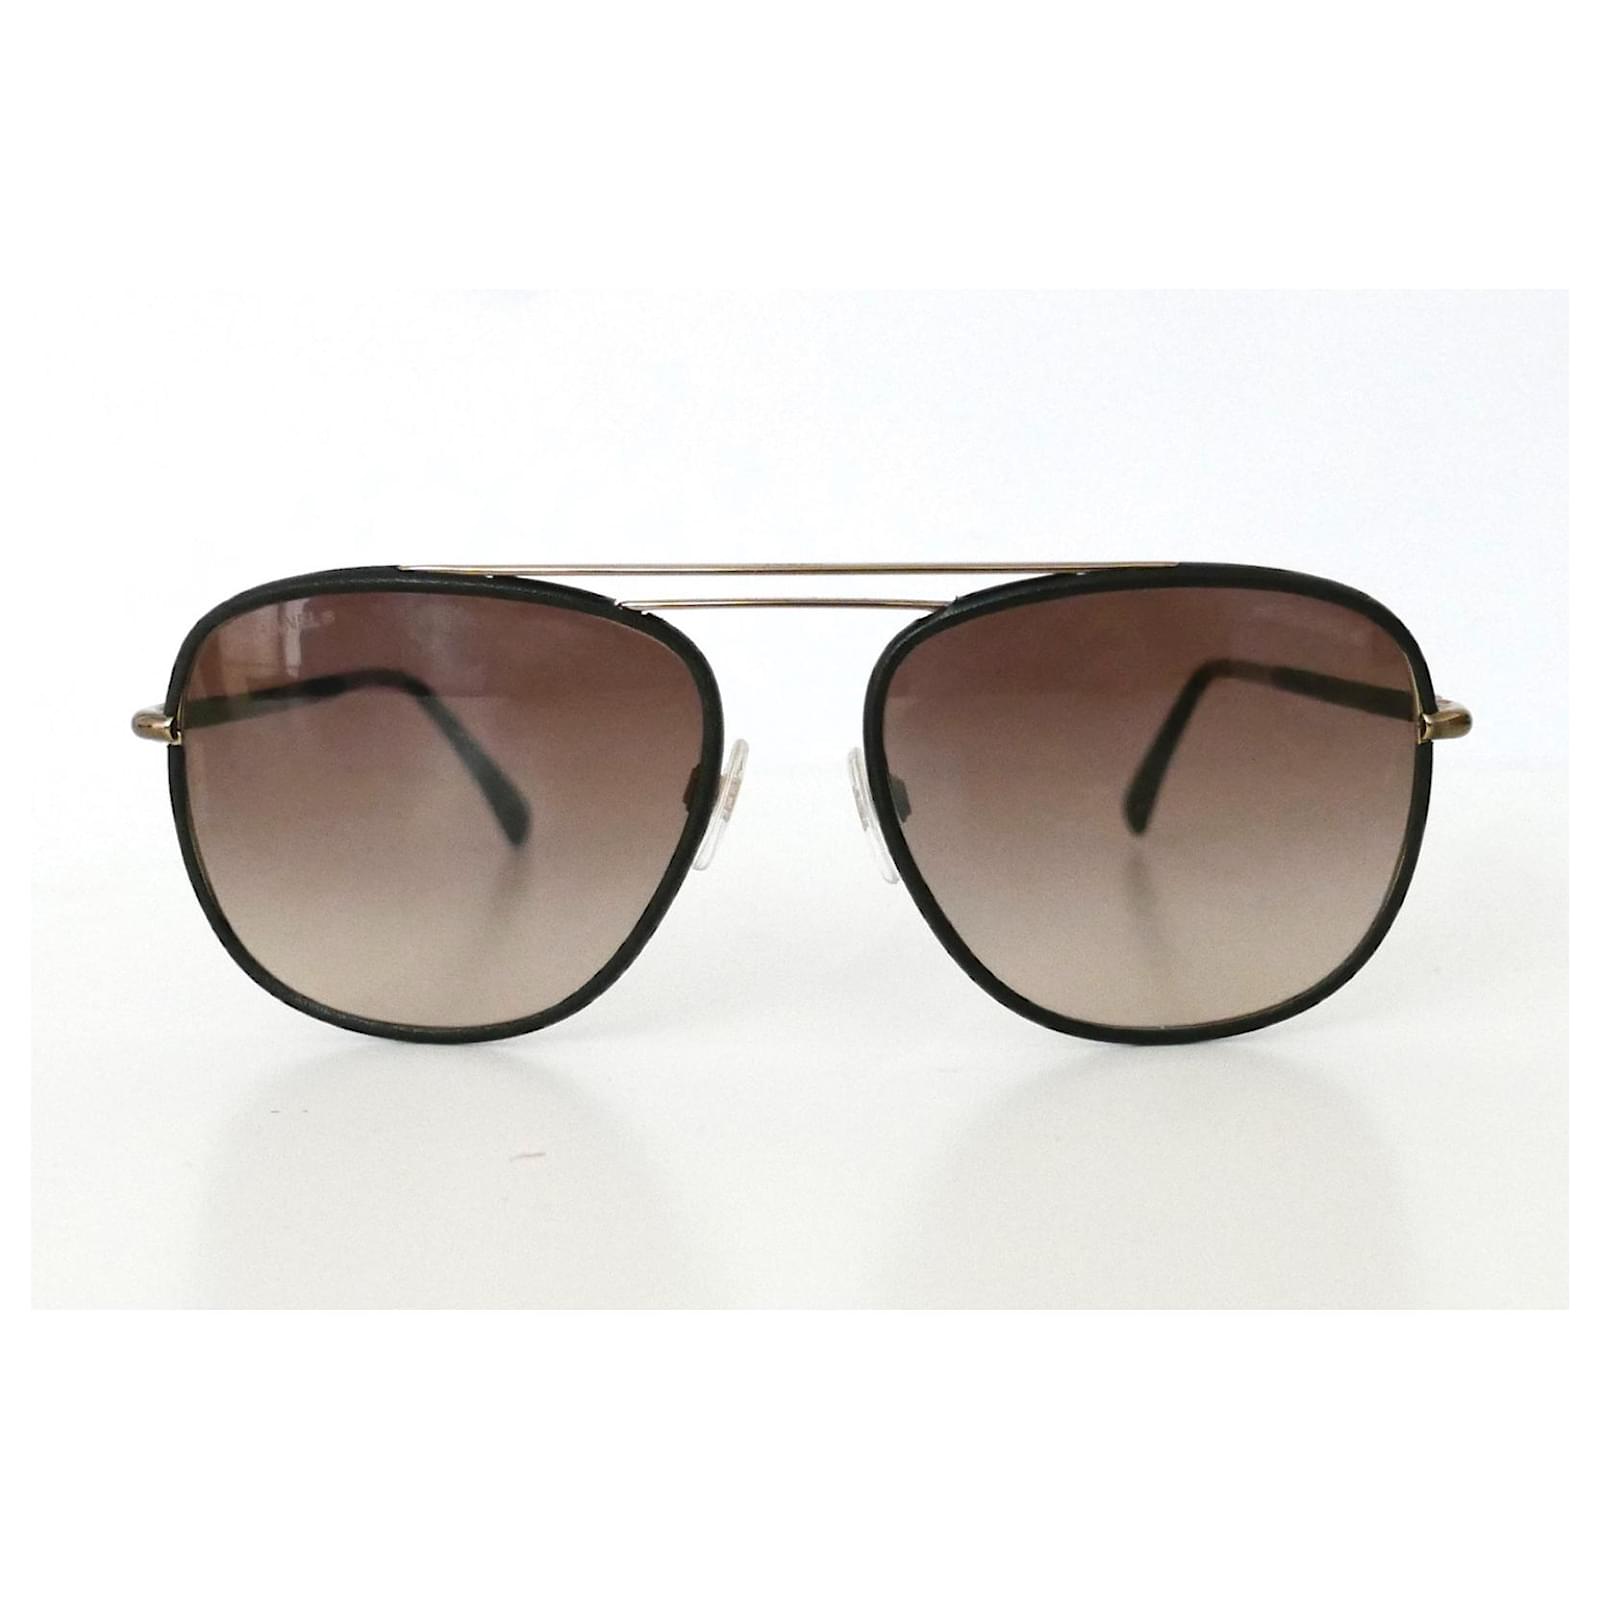 Men's Vintage Aluminum Polarized Sunglasses Classic Brand Coating Lens  Driving Eyewear – Jollynova